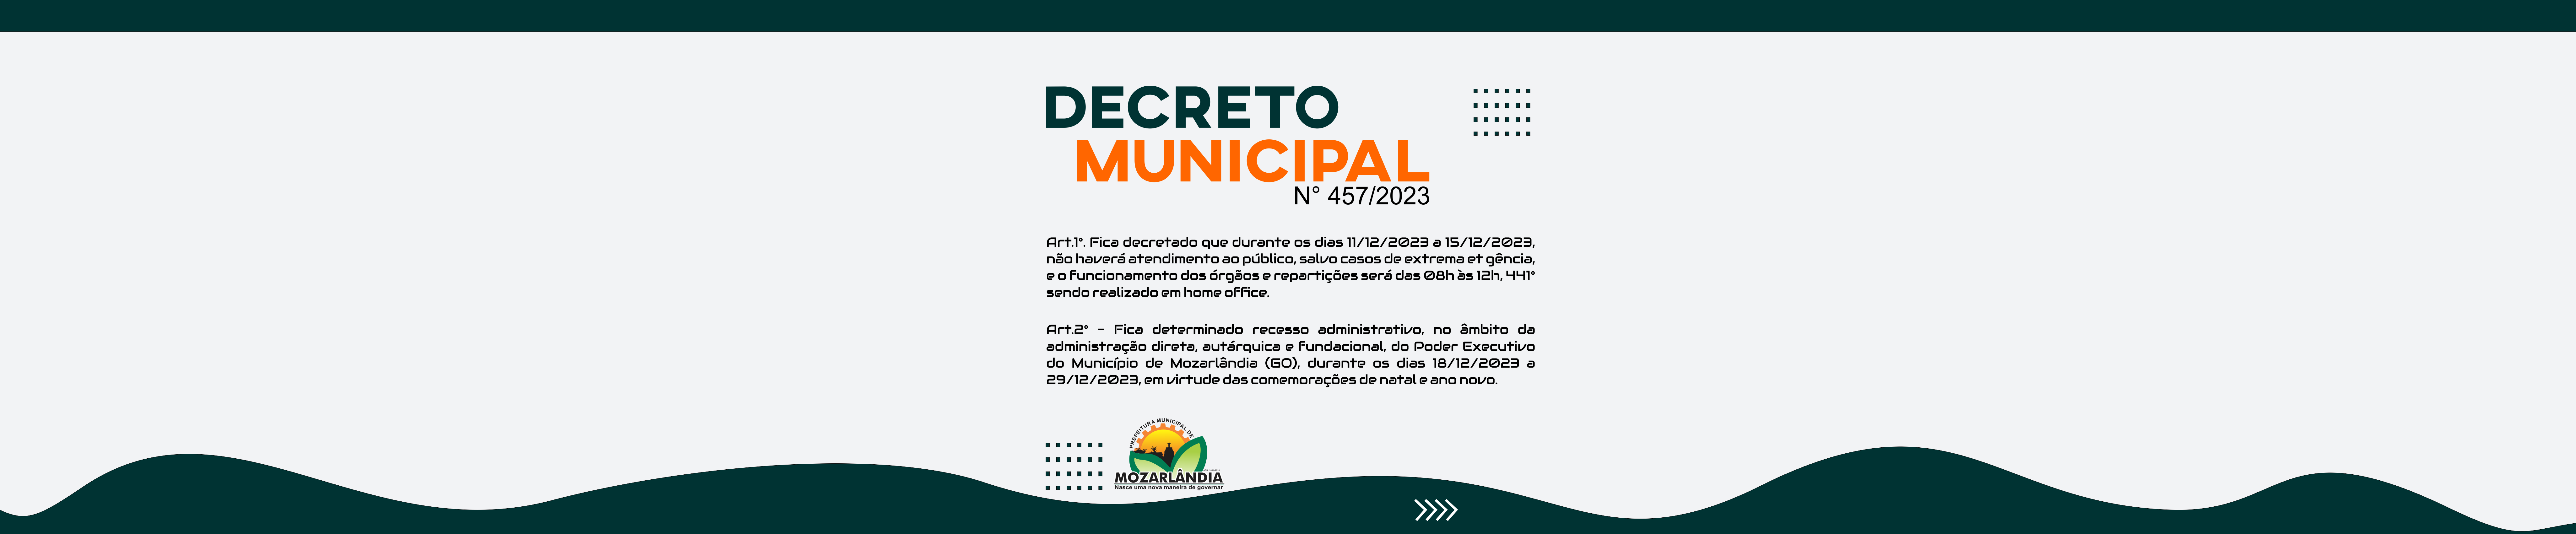 Decreto Municipal n457/2023